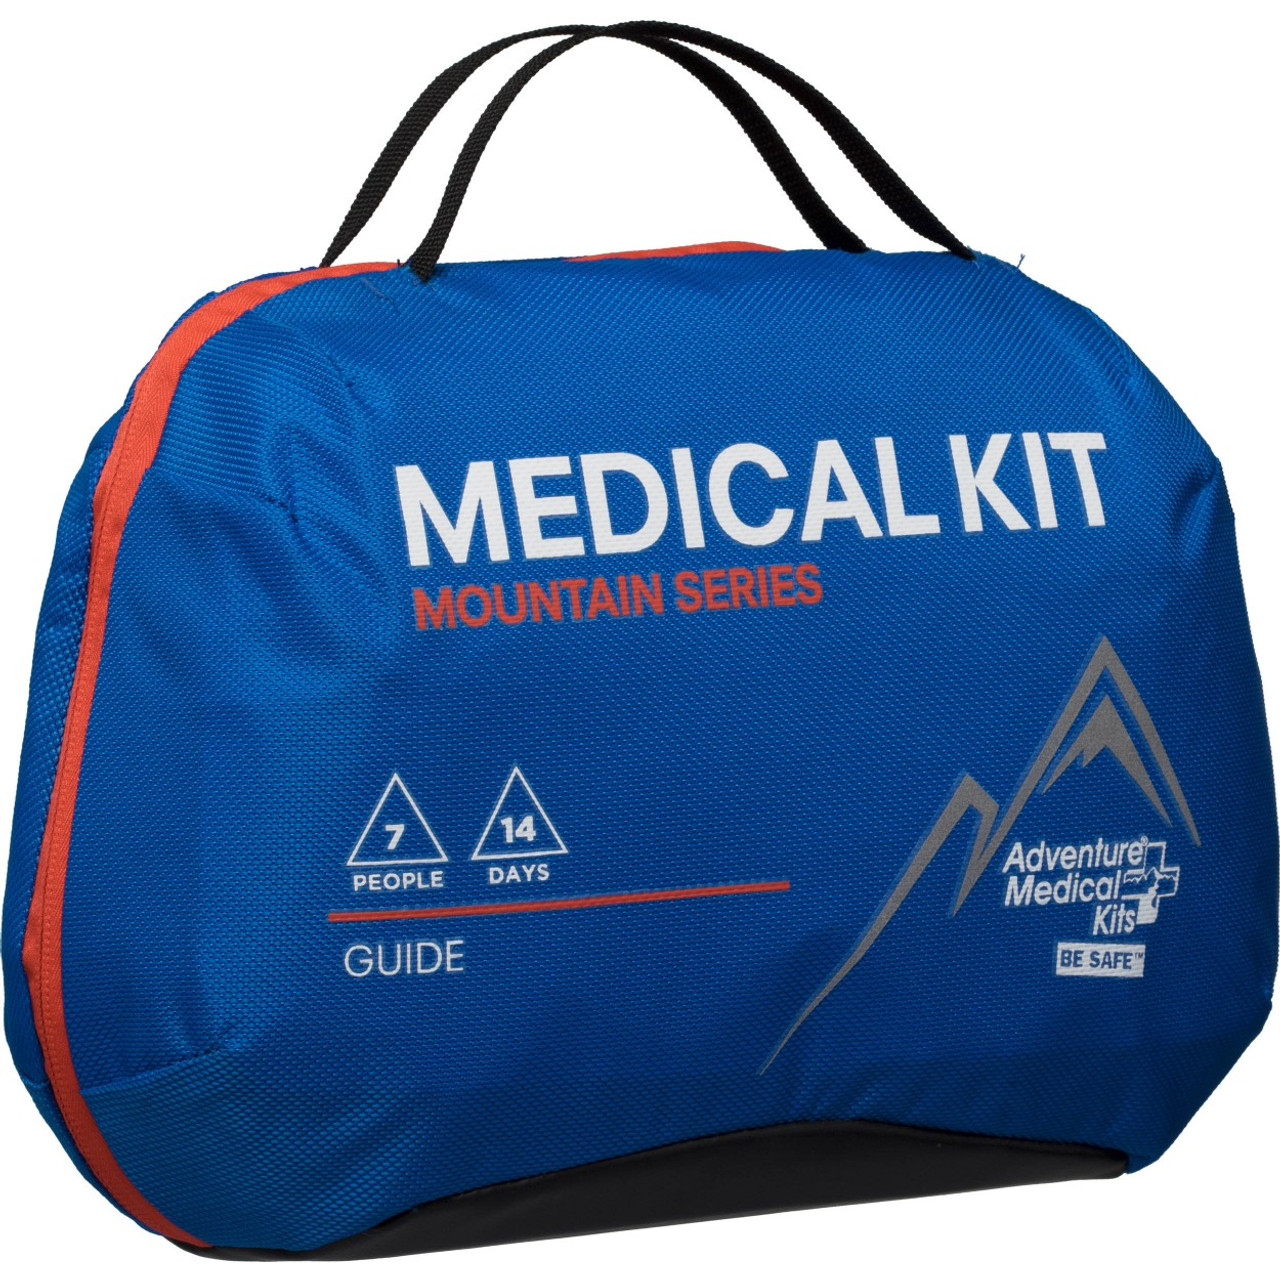 Adventure Medical Kit Mountain Series - Guide